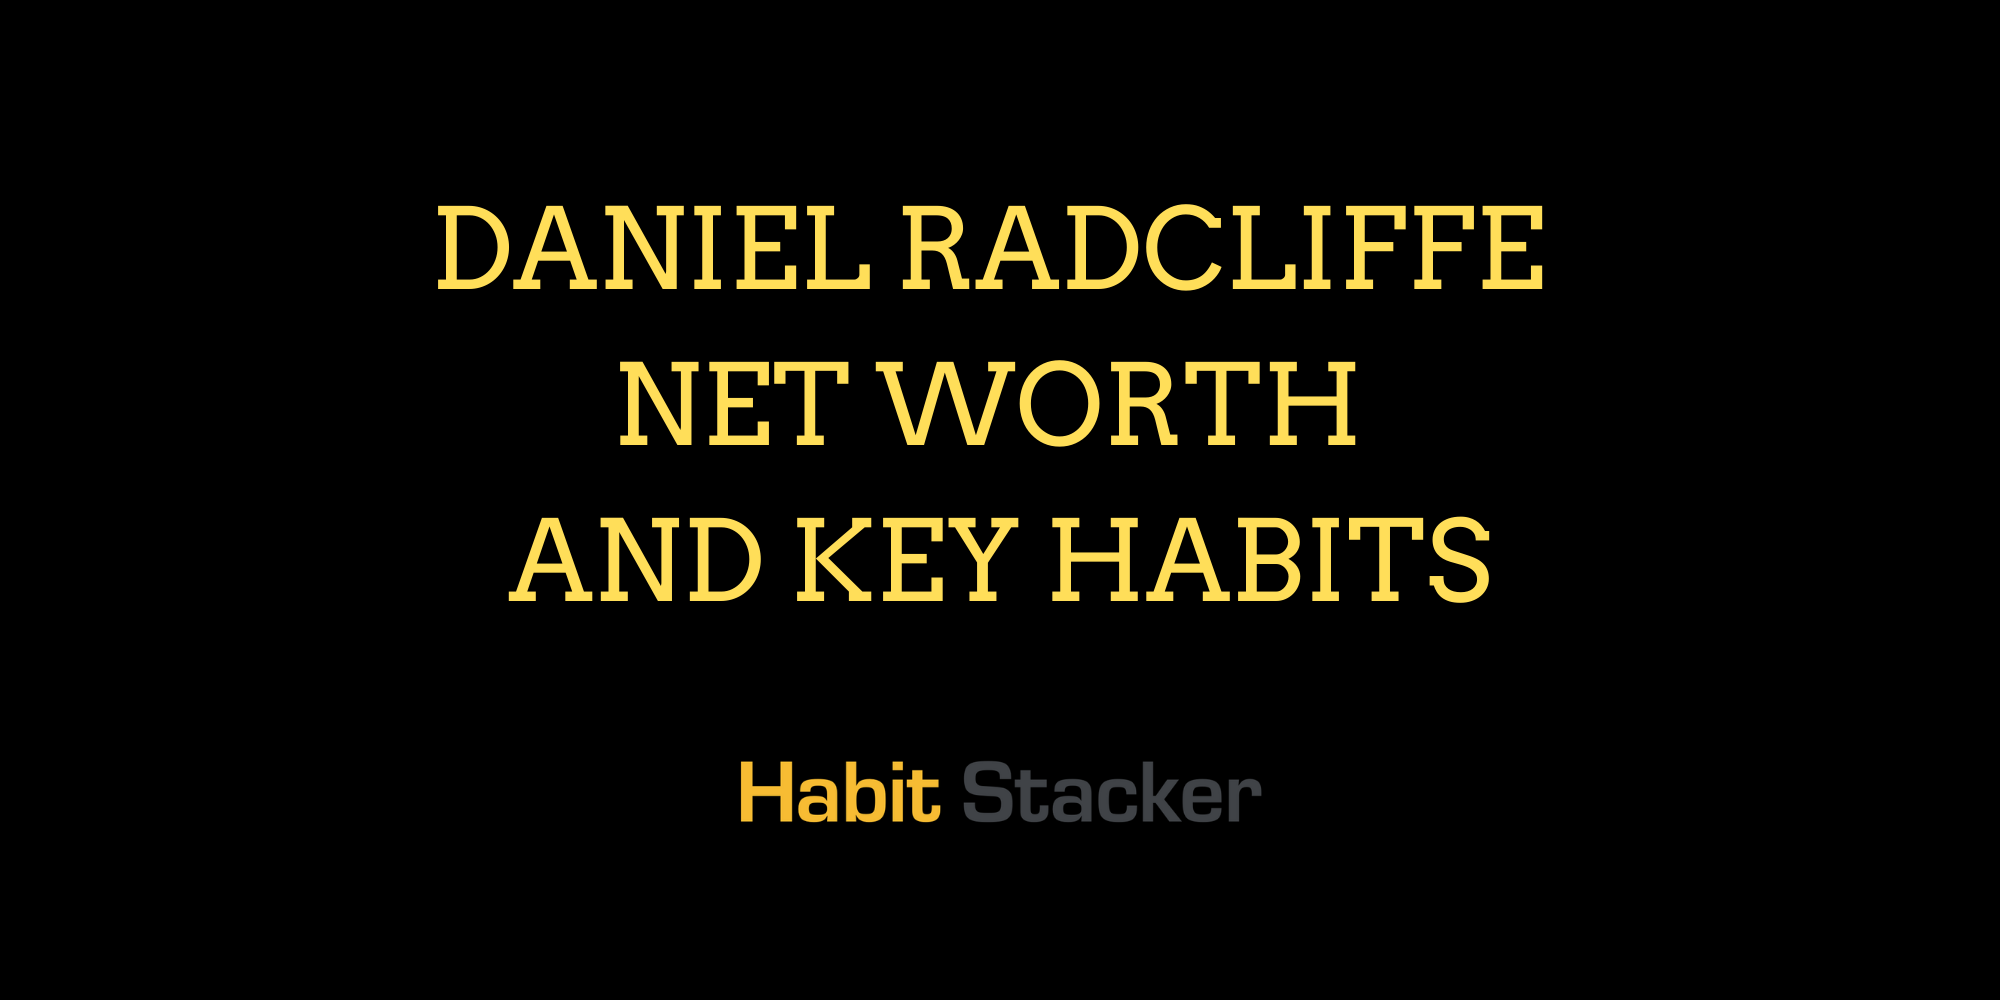 Daniel Radcliffe Net Worth and Key Habits